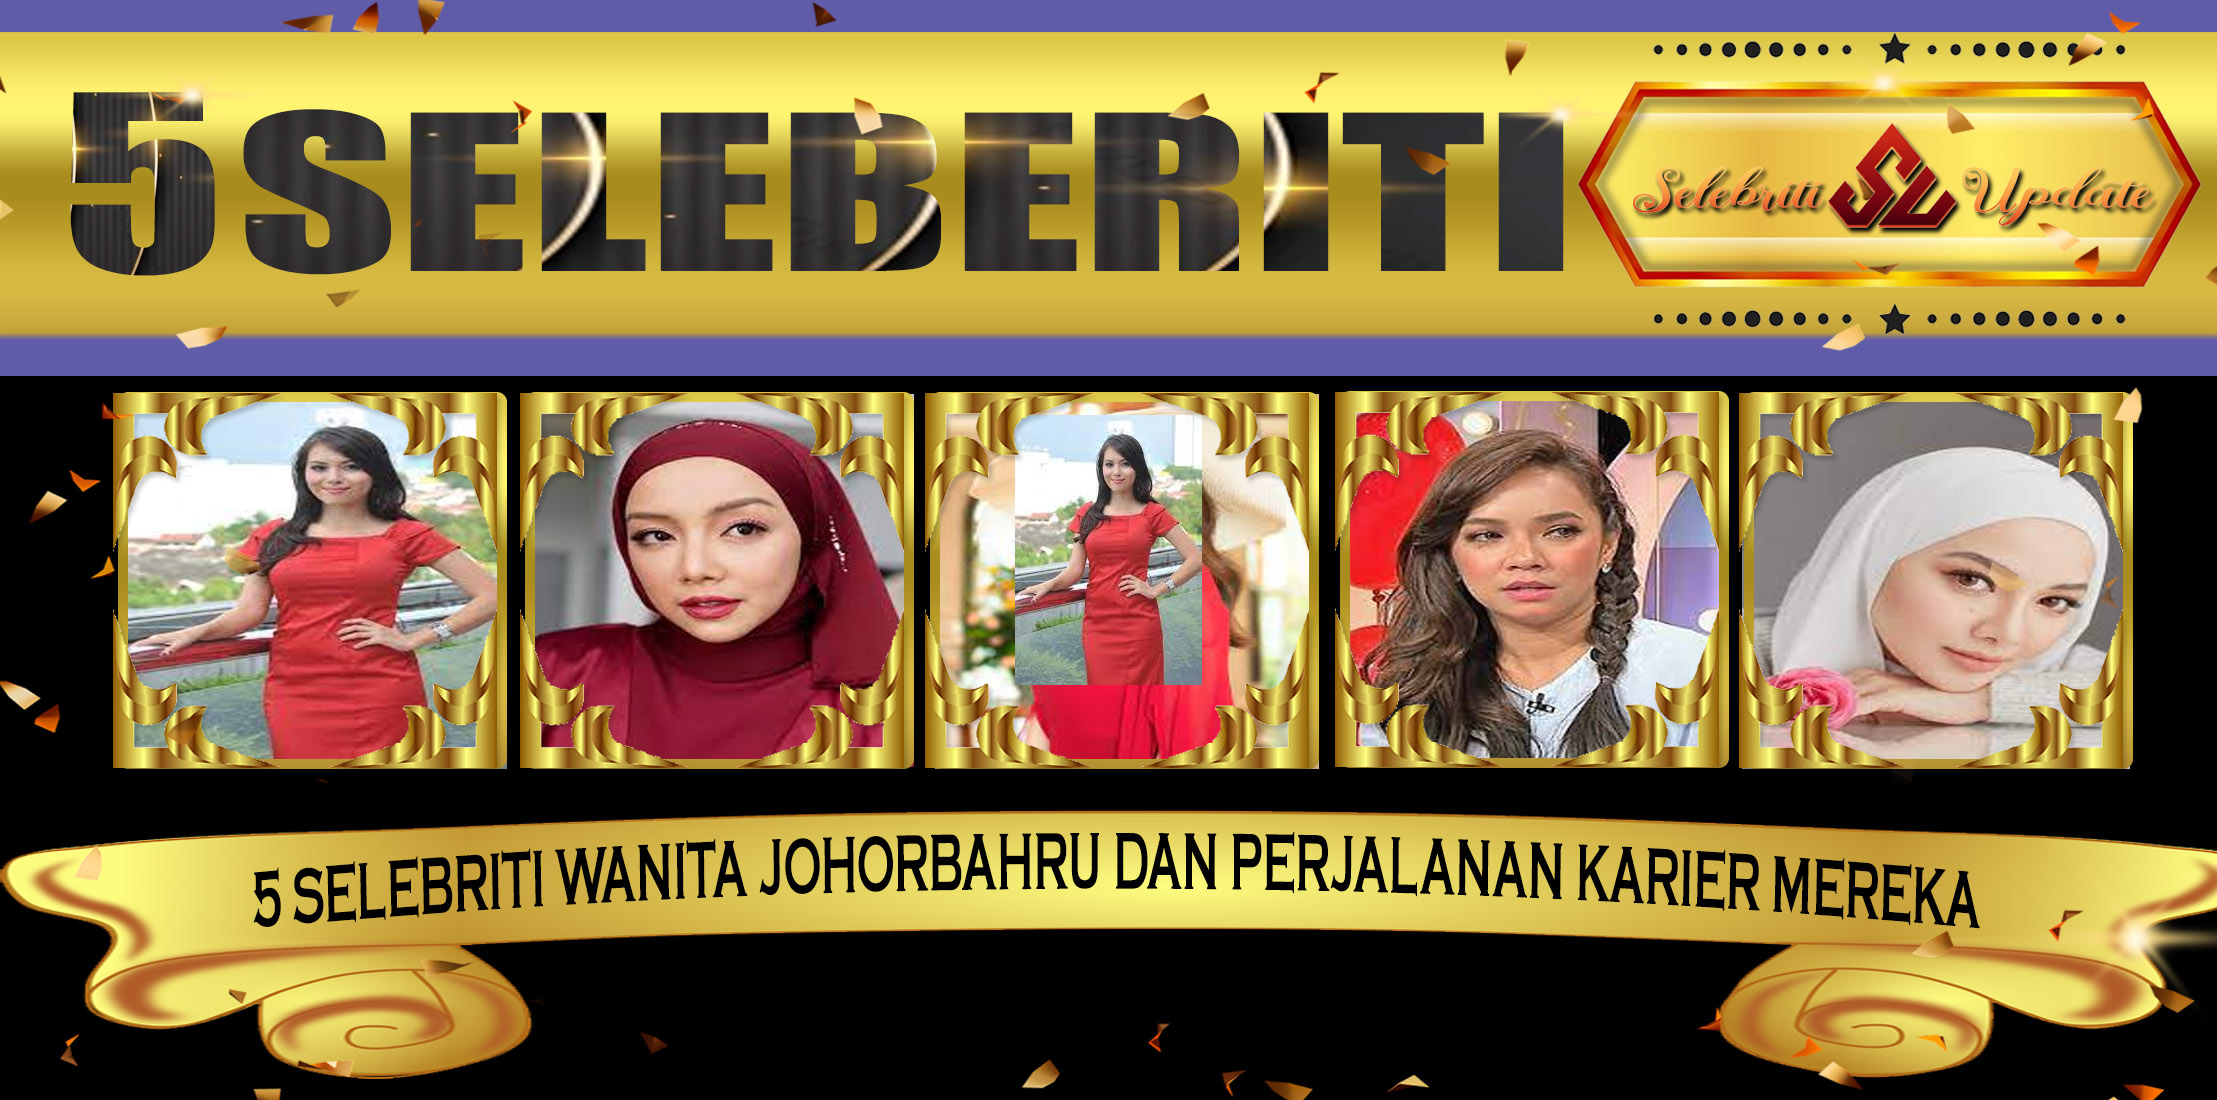 5 Selebriti Wanita JohorBahru